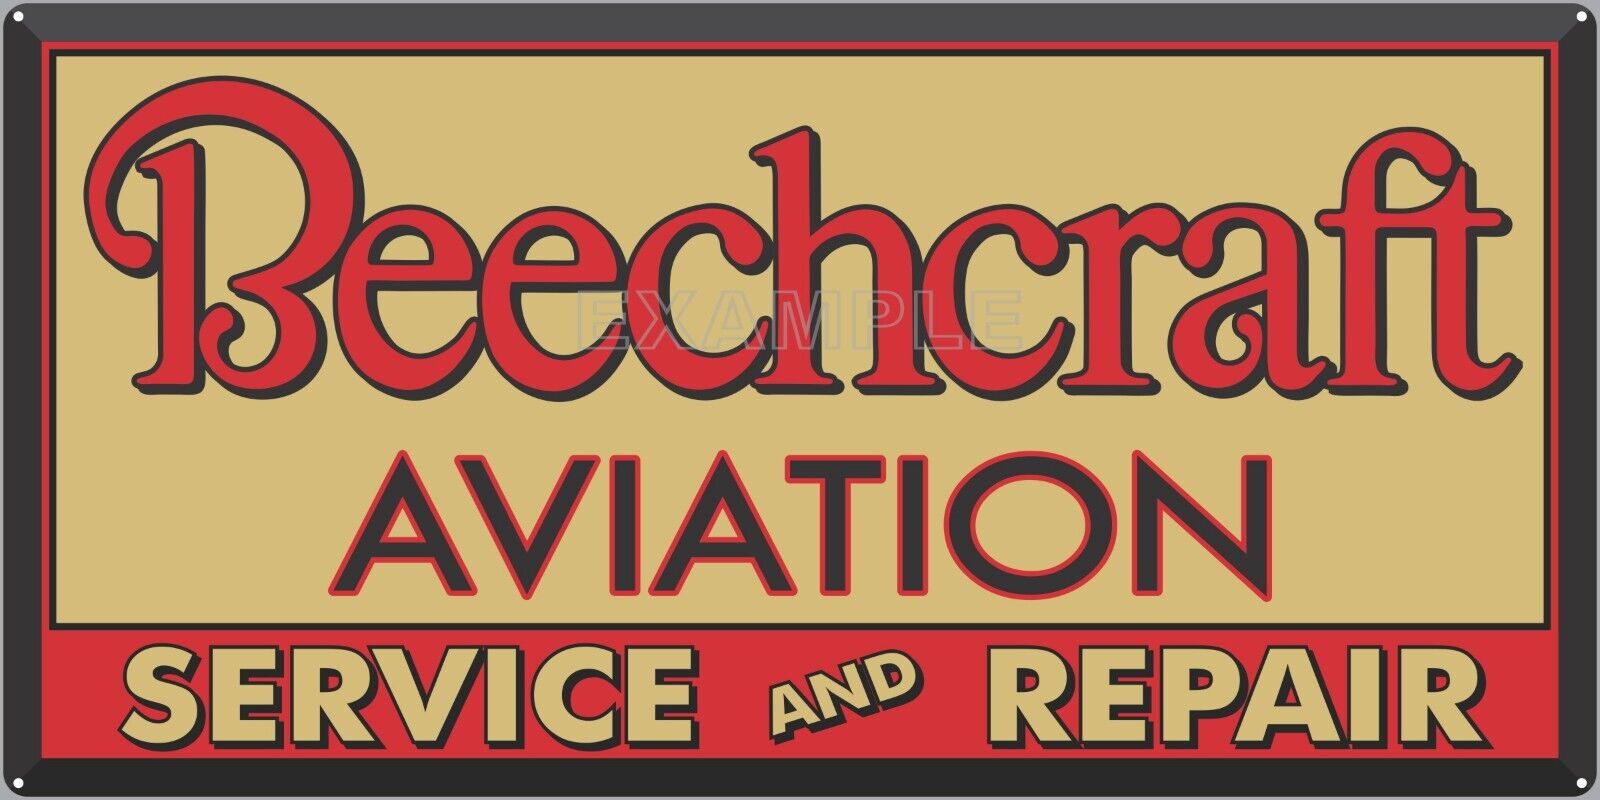 BEECHCRAFT AVIATION AIRPLANES AIRCRAFT DEALER SIGN REMAKE ALUMINUM SIZE OPTIONS